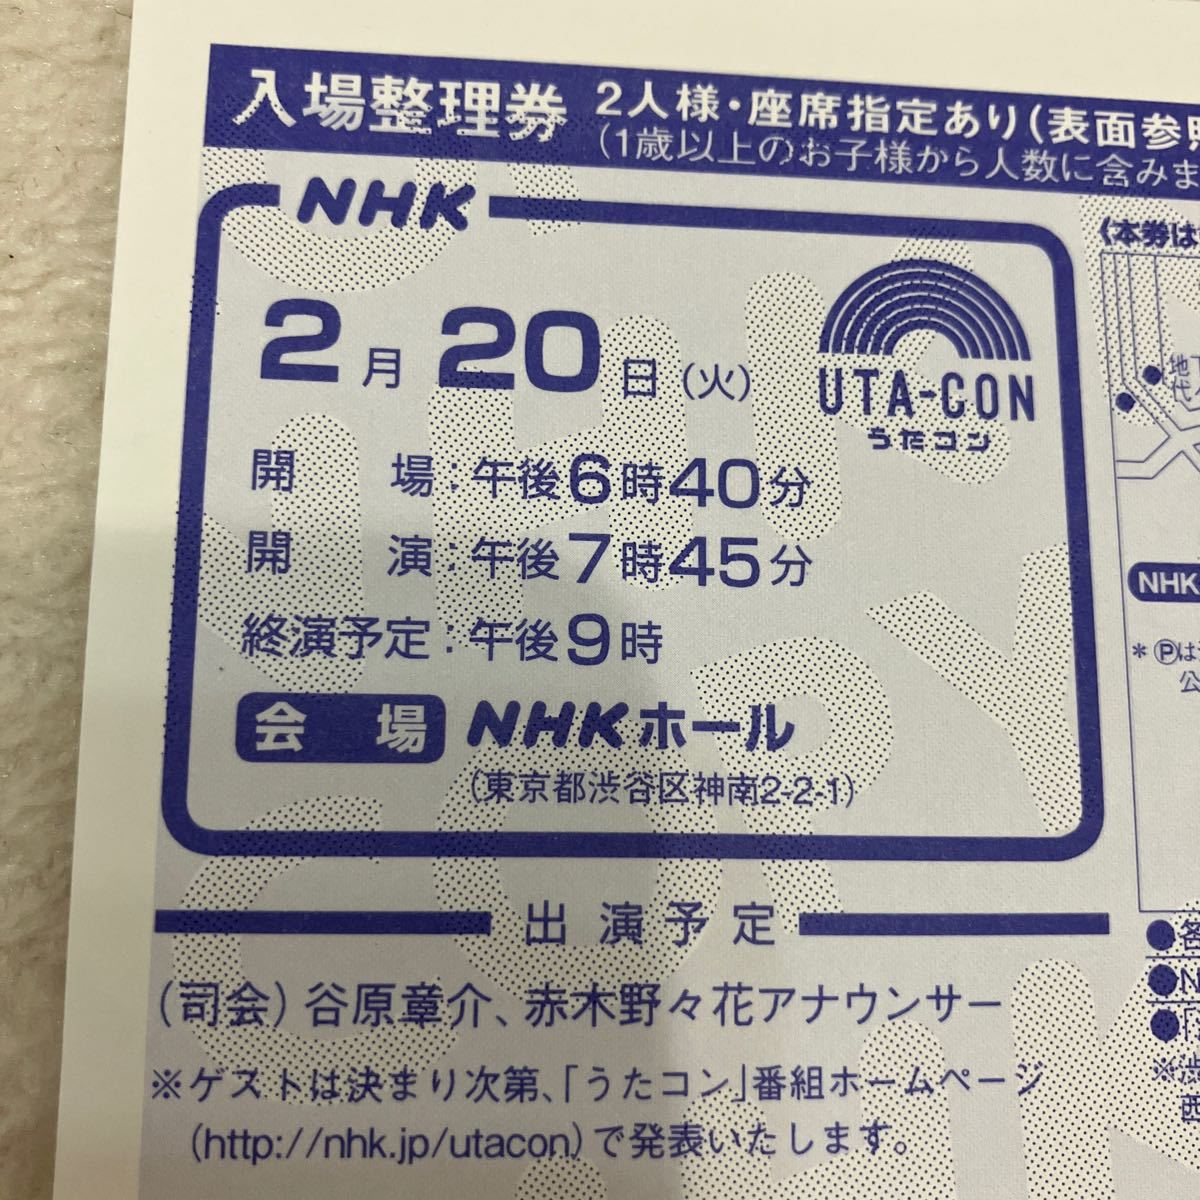 NHK うたコン 2/20 女性名義 入場整理券 2連番_画像1